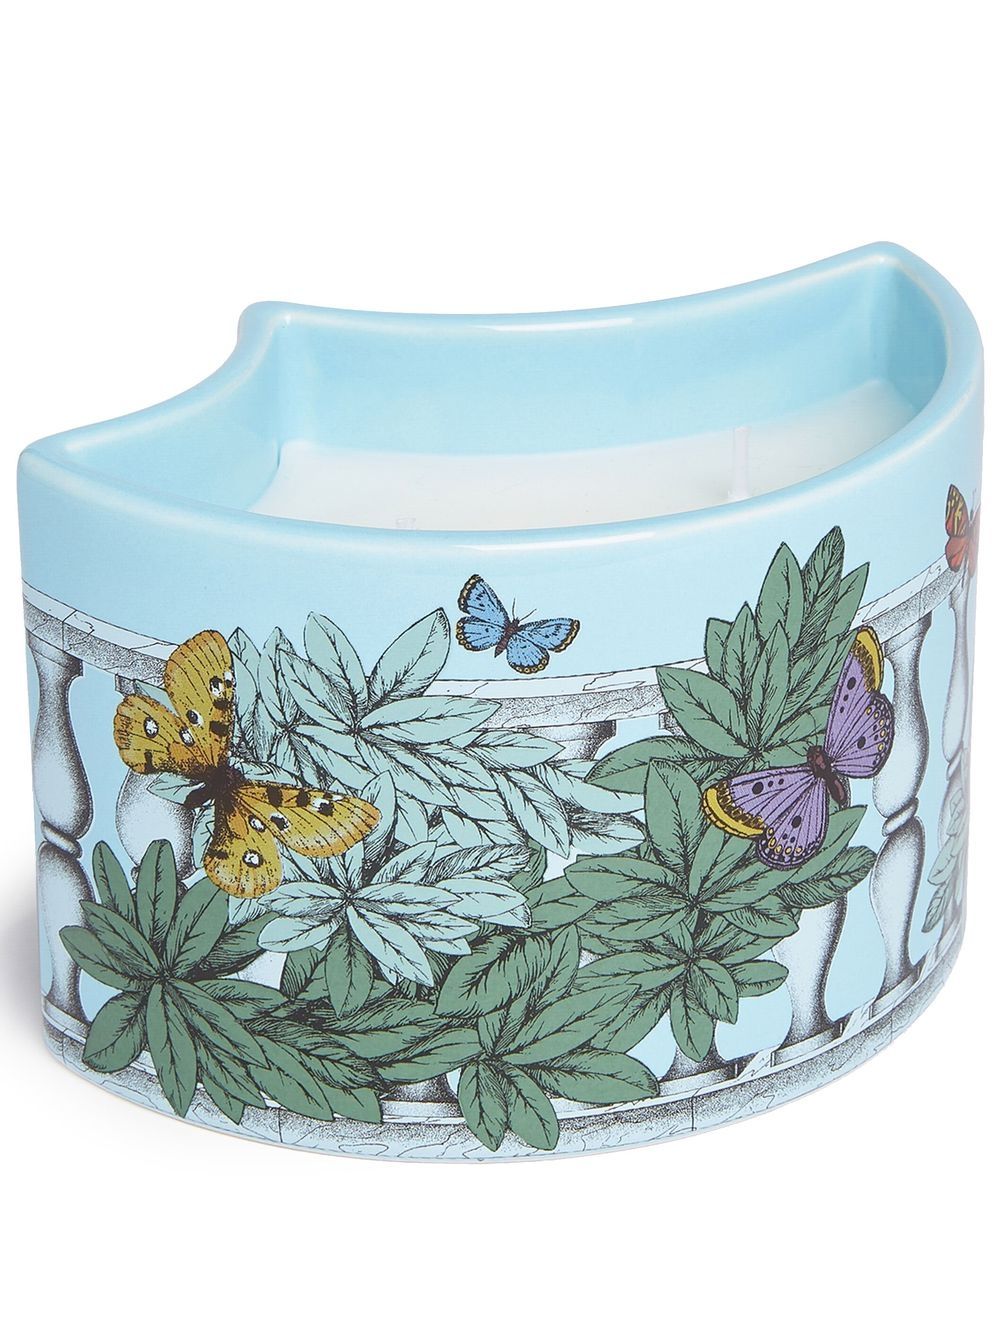 Fornasetti Farfalle e Balaustra scented candle (530g) - Blue von Fornasetti